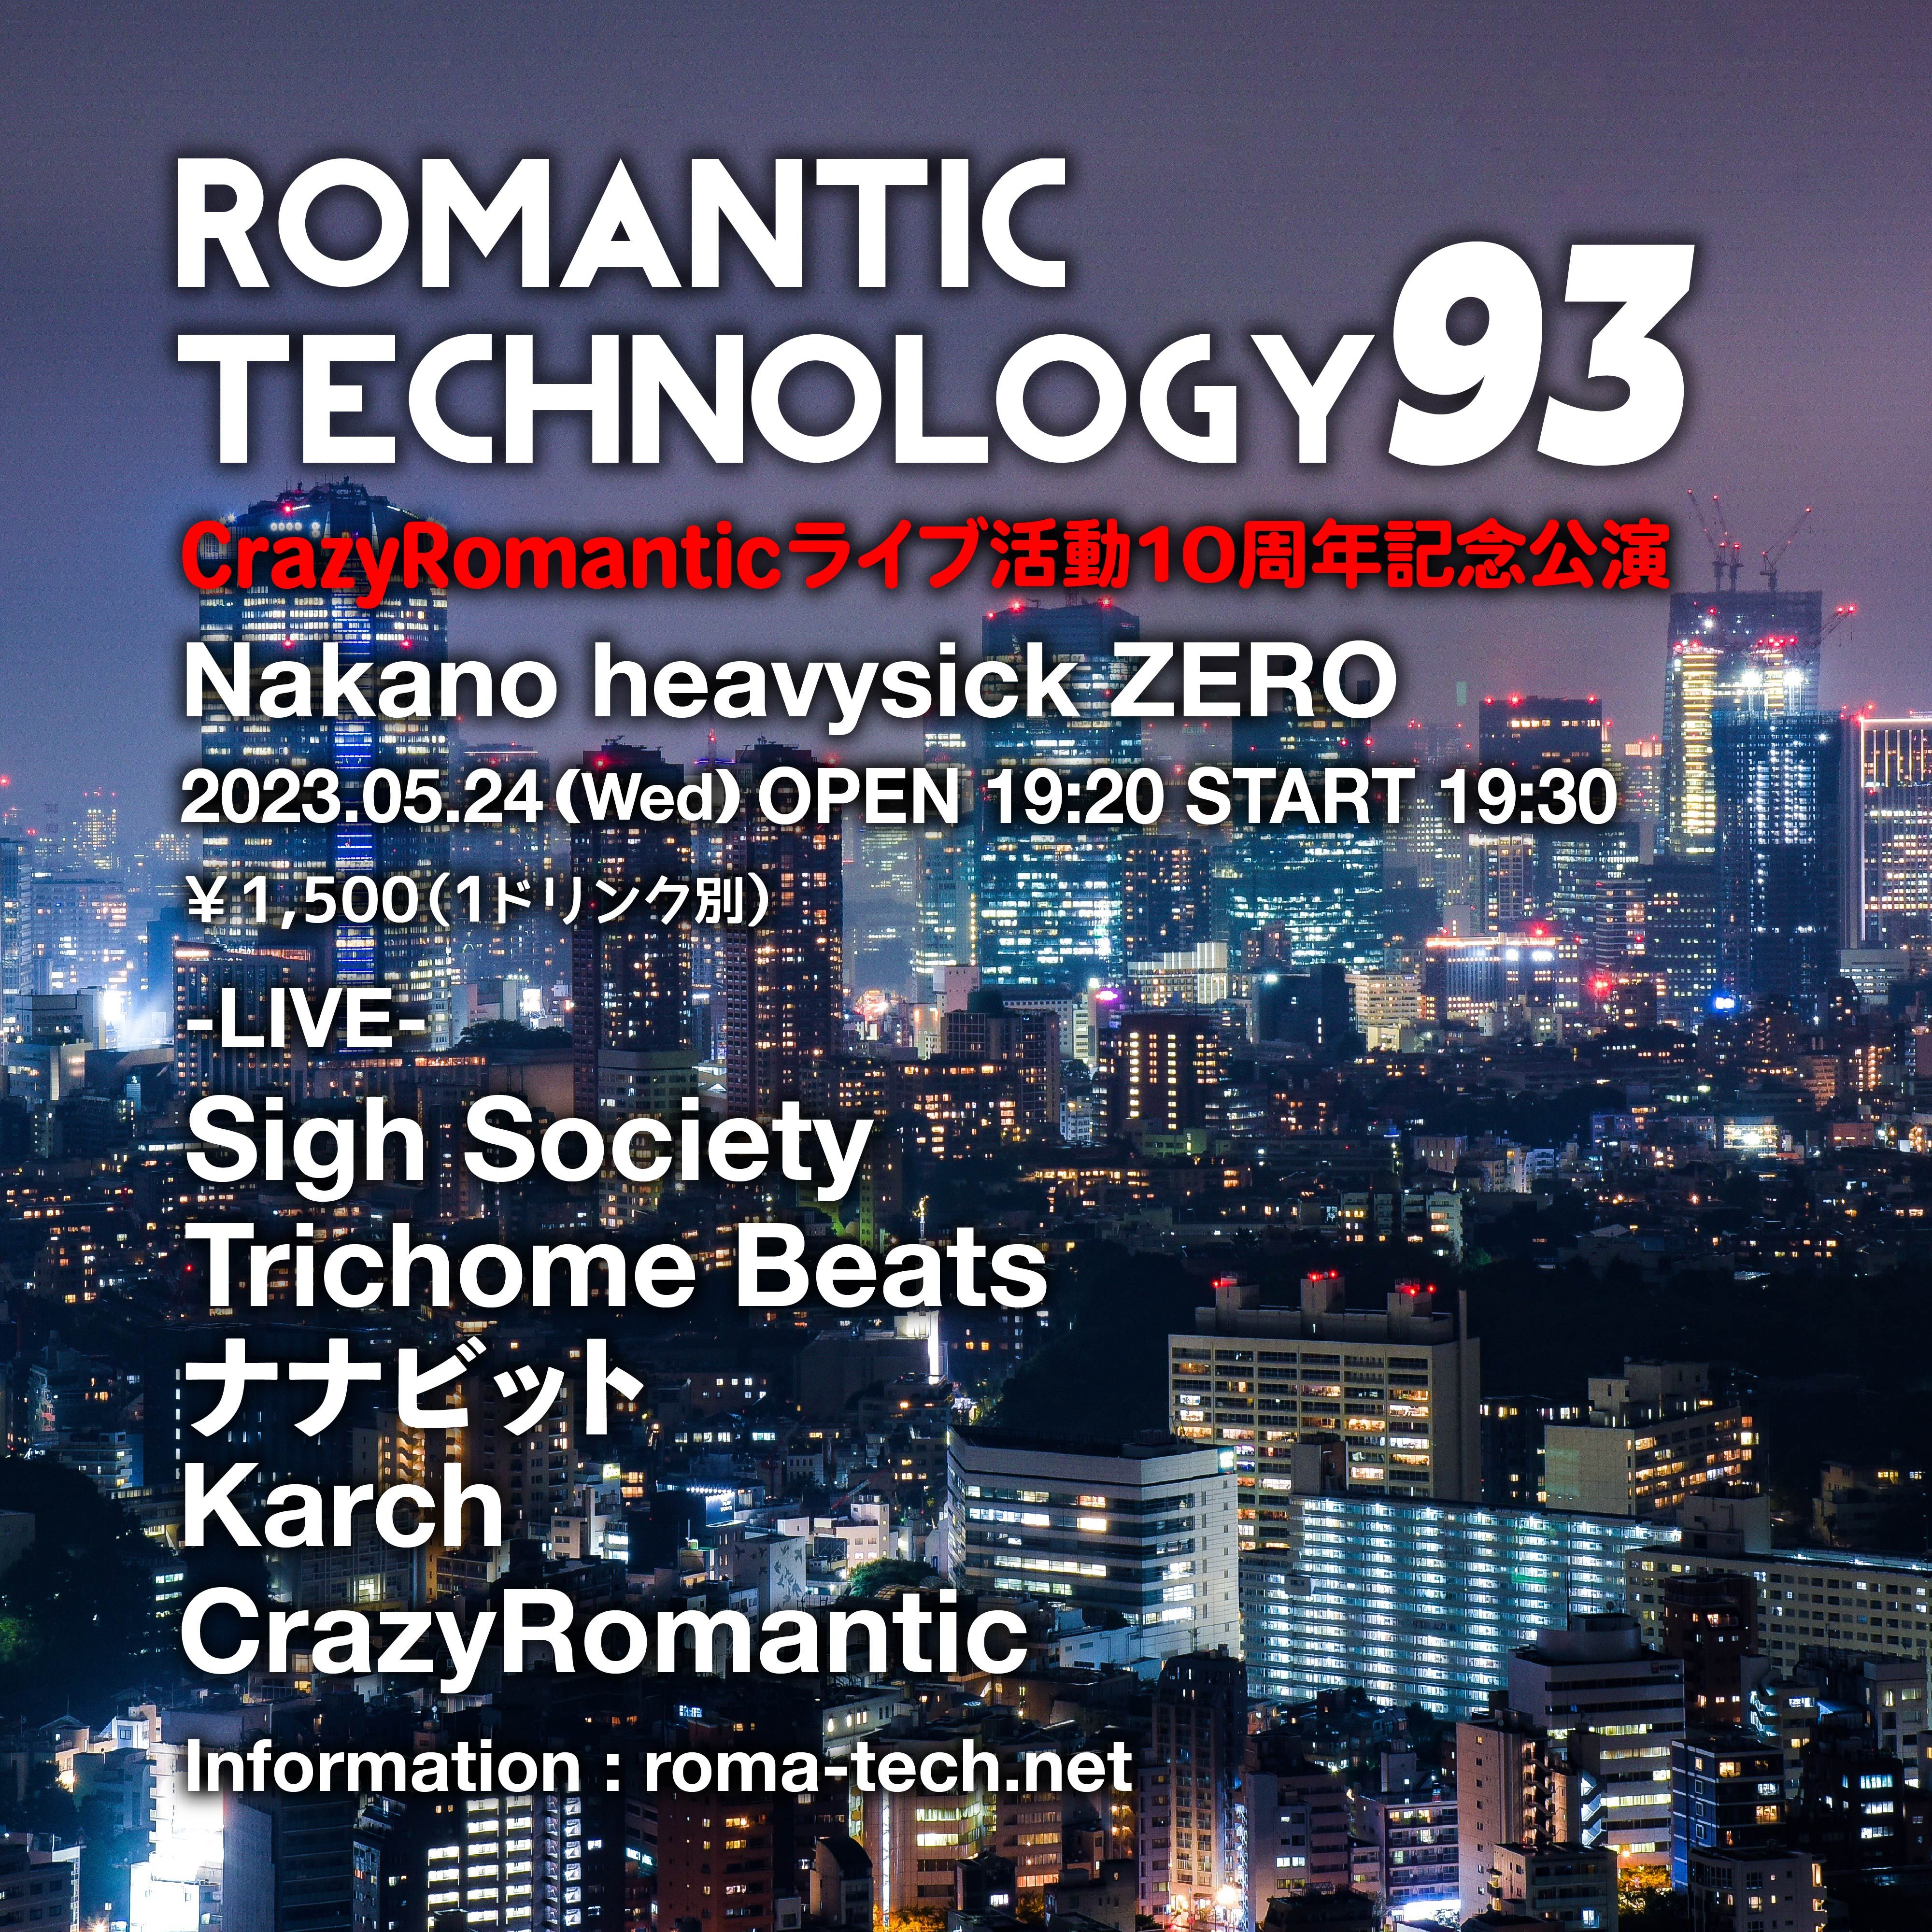 ROMANTIC TECHNOLOGY 93